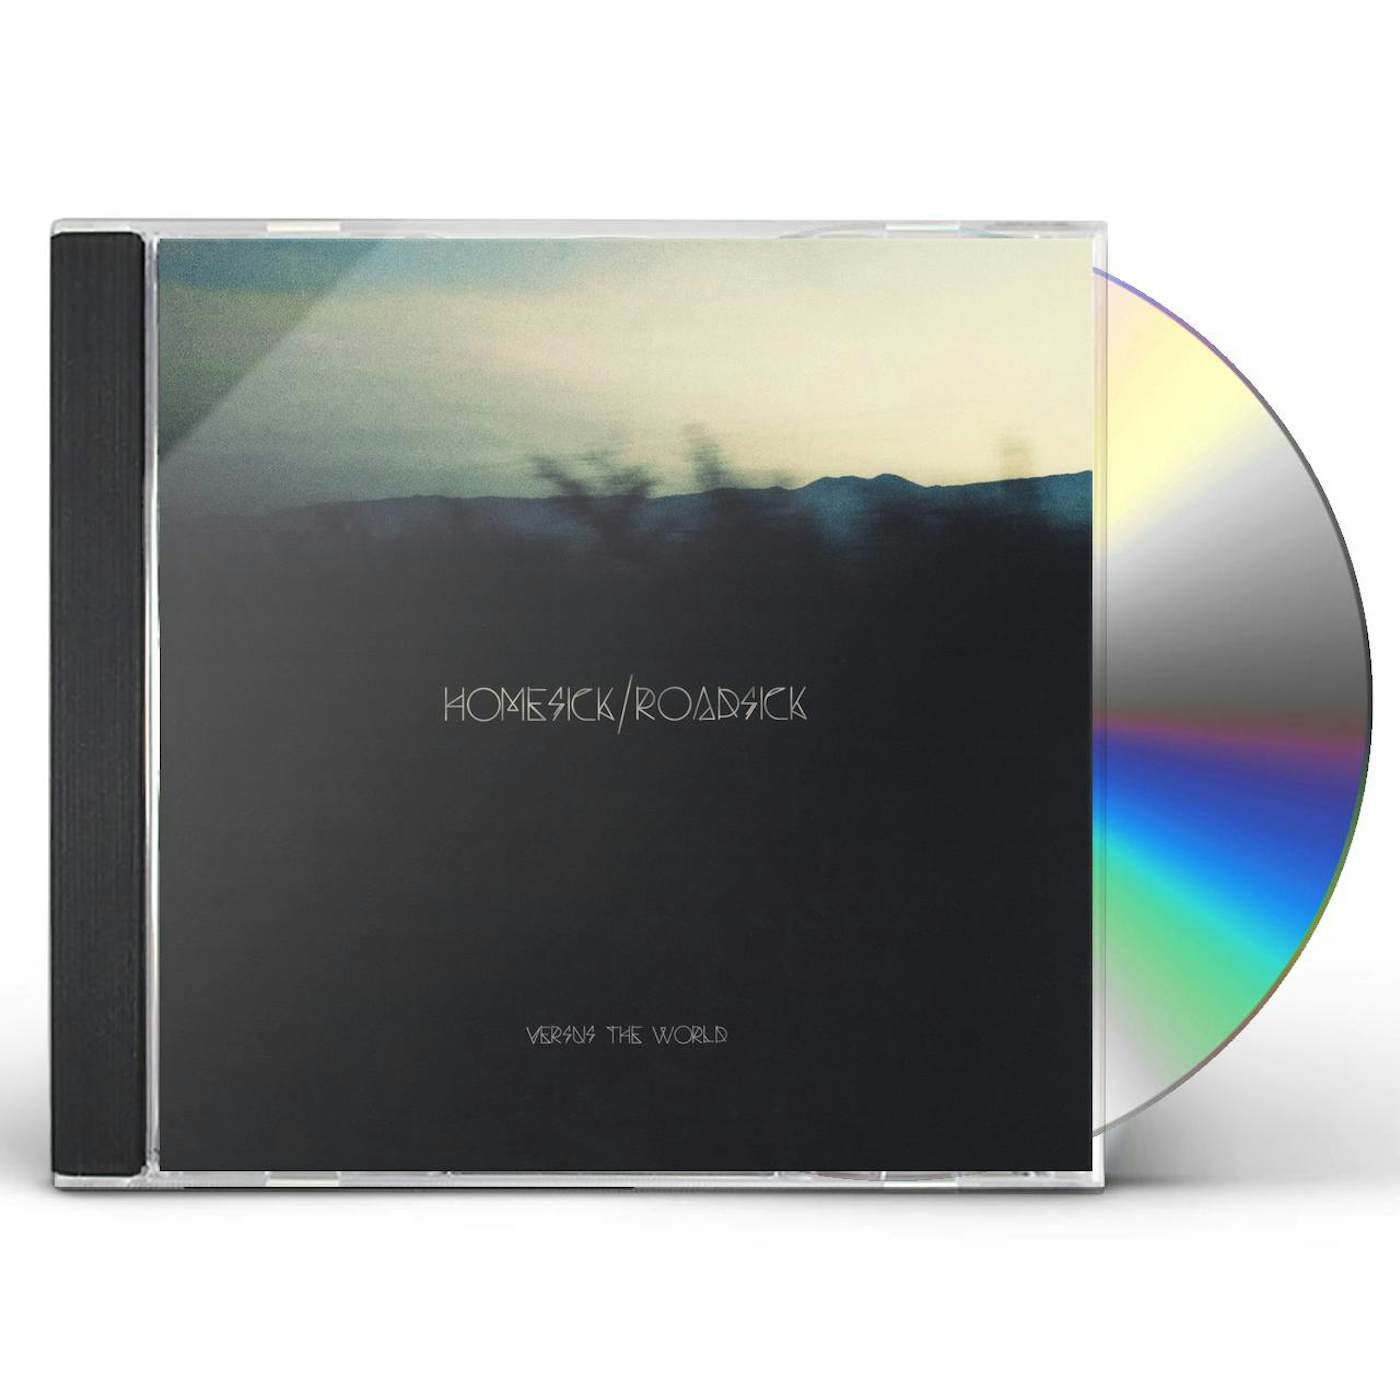 Versus The World HOMESICK / ROADSICK CD